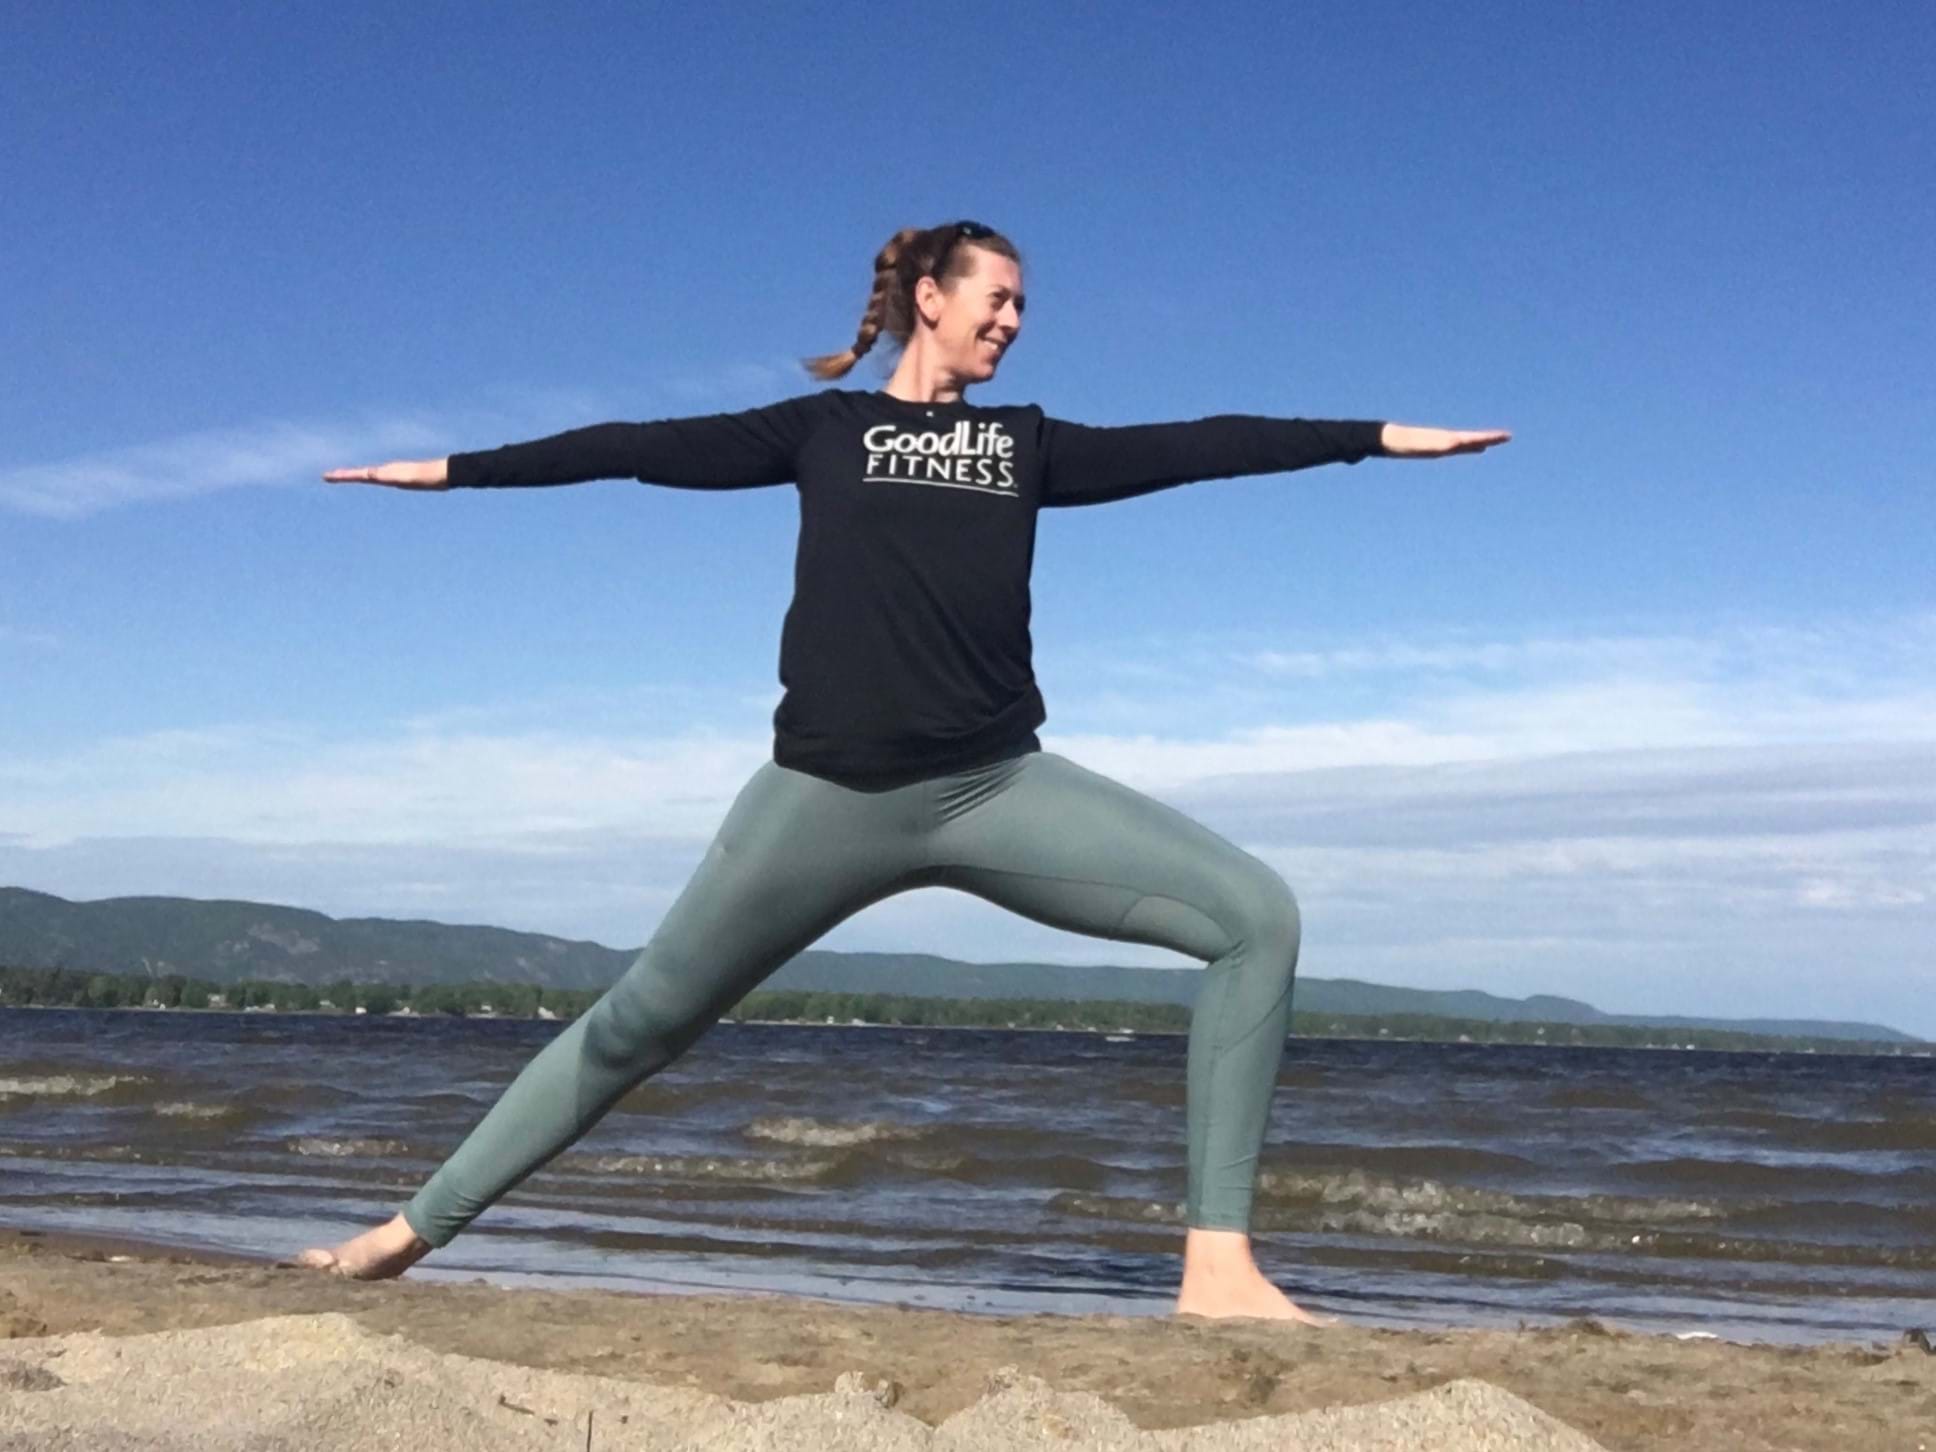 Abby Johnson-Bertran practices yoga poses on the beach near Ottawa